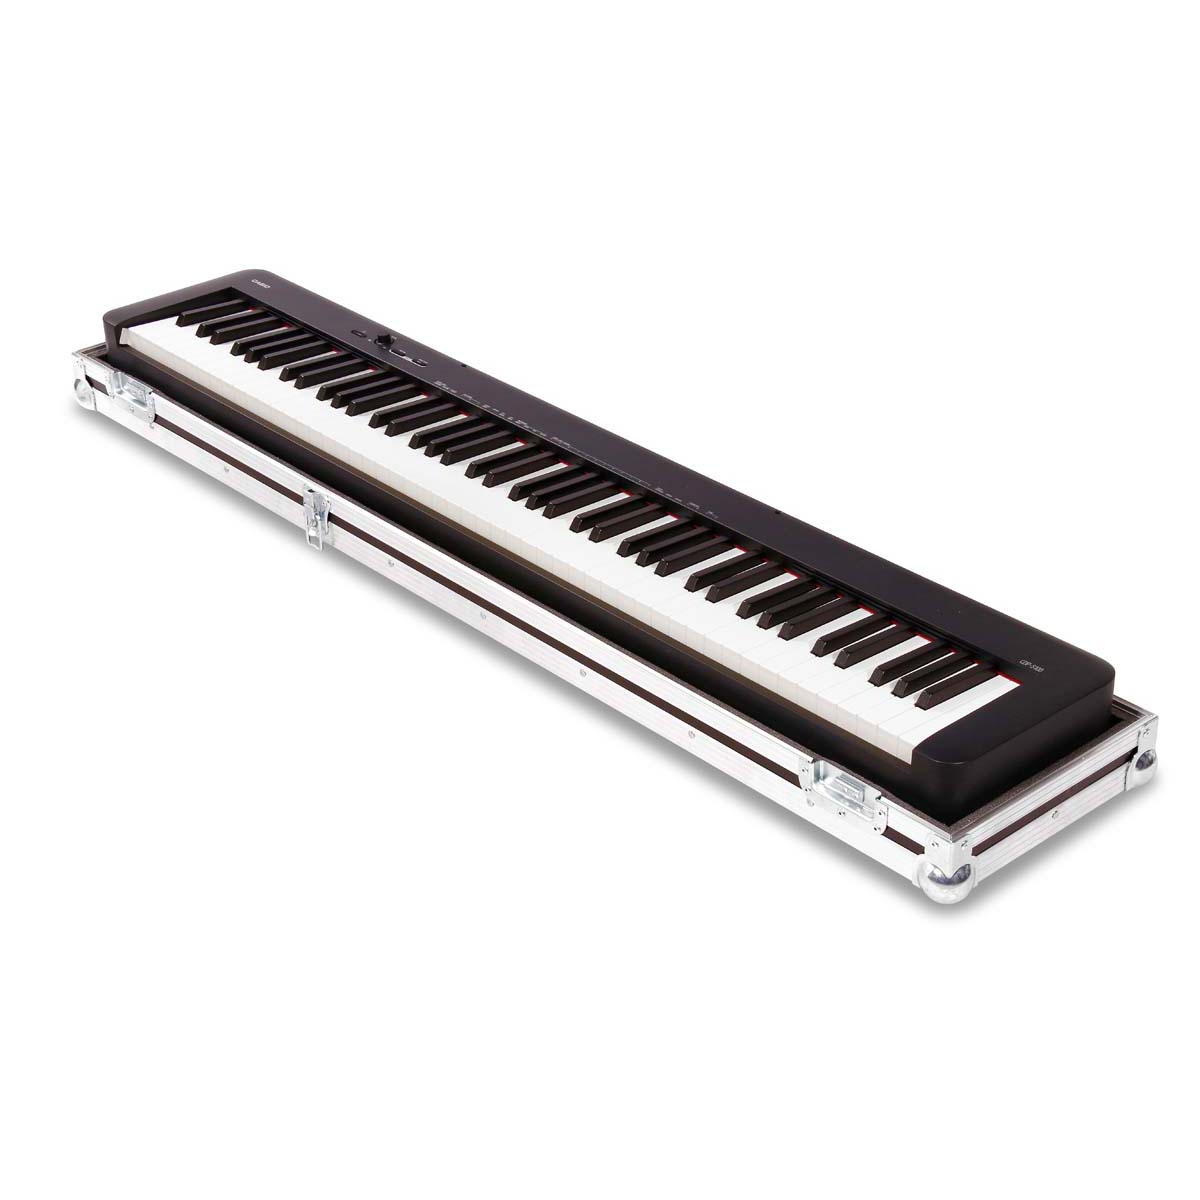 Keyboard Casio | Megacase